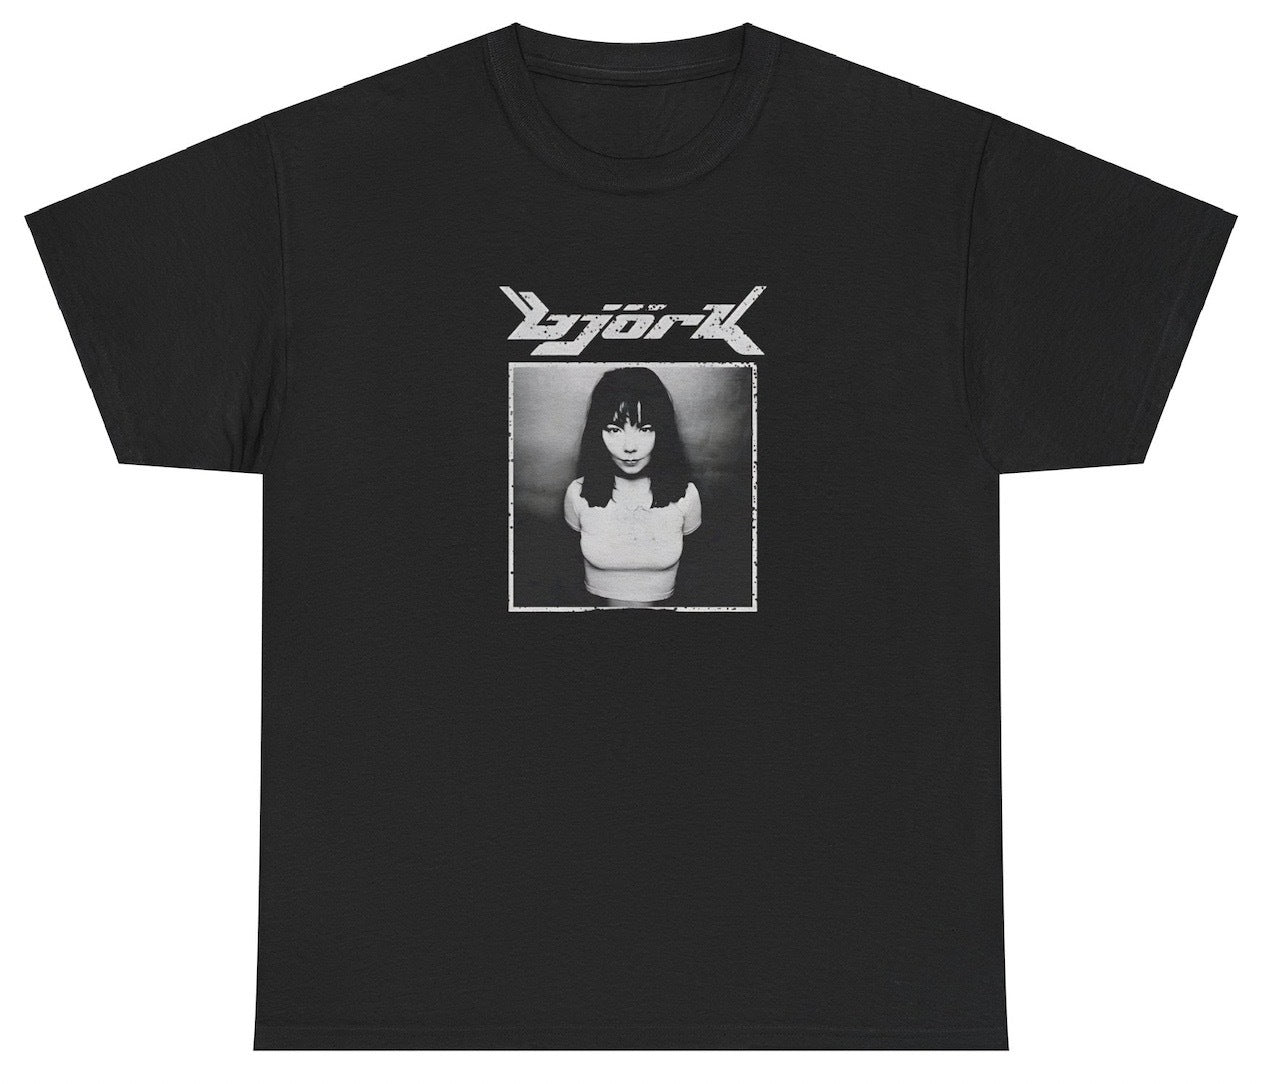 AAA Bjork T Shirt Music Pop Y2K Japanese Fan PJ Harvey Kate Bush The Sugarcubes Tee